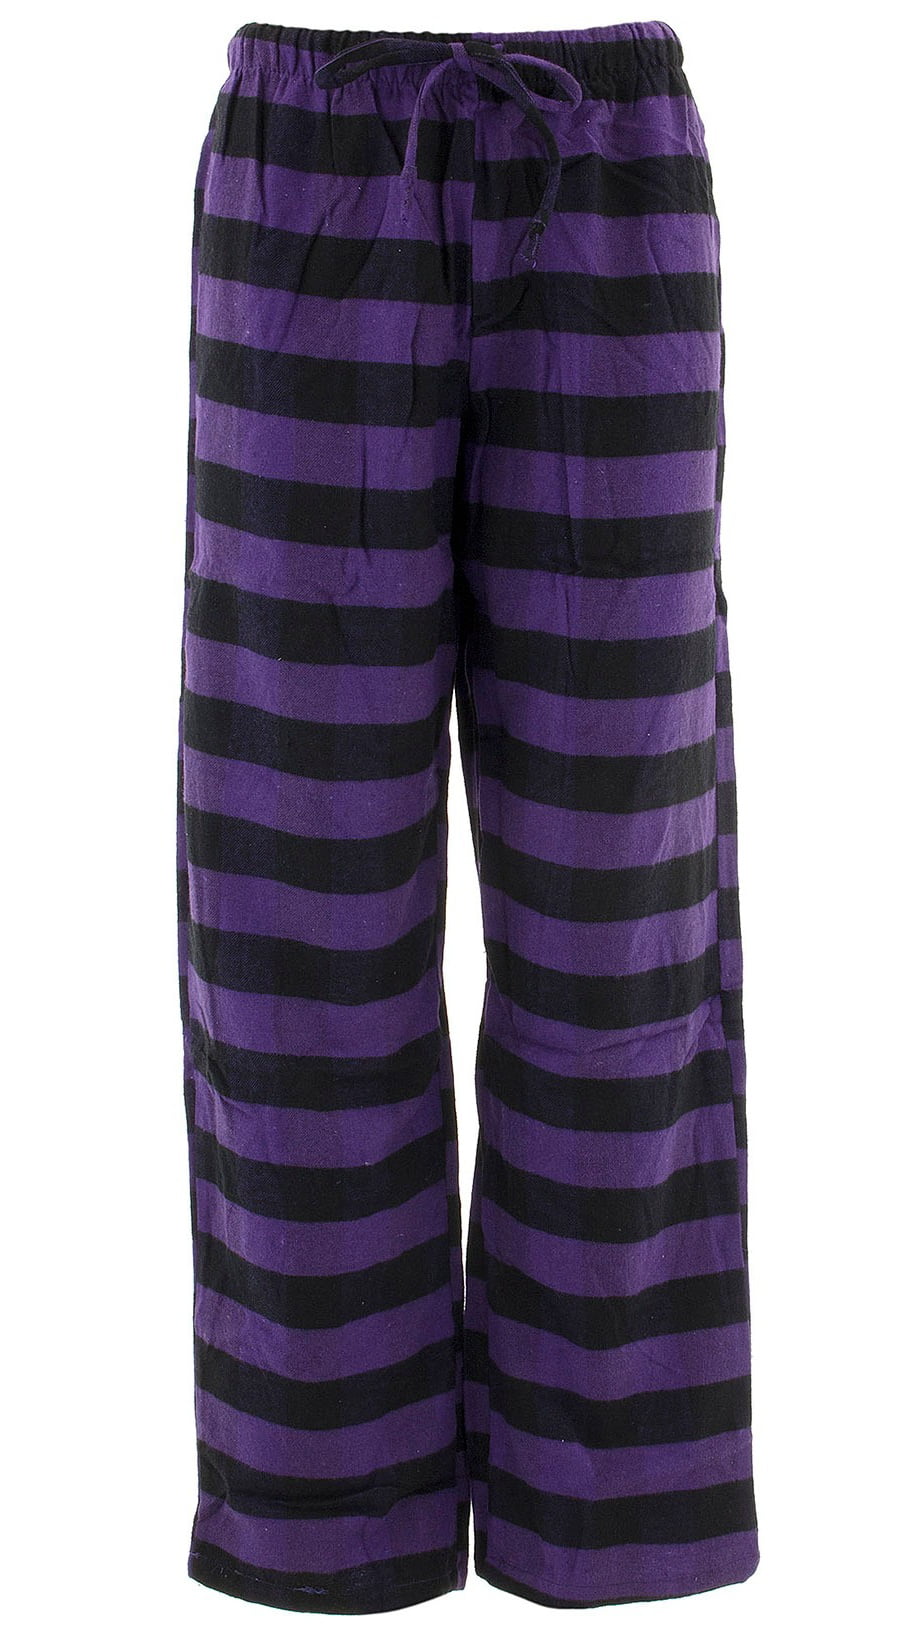 Inteco - Inteco Intimates Women's Purple Black Striped Flannel Pajama